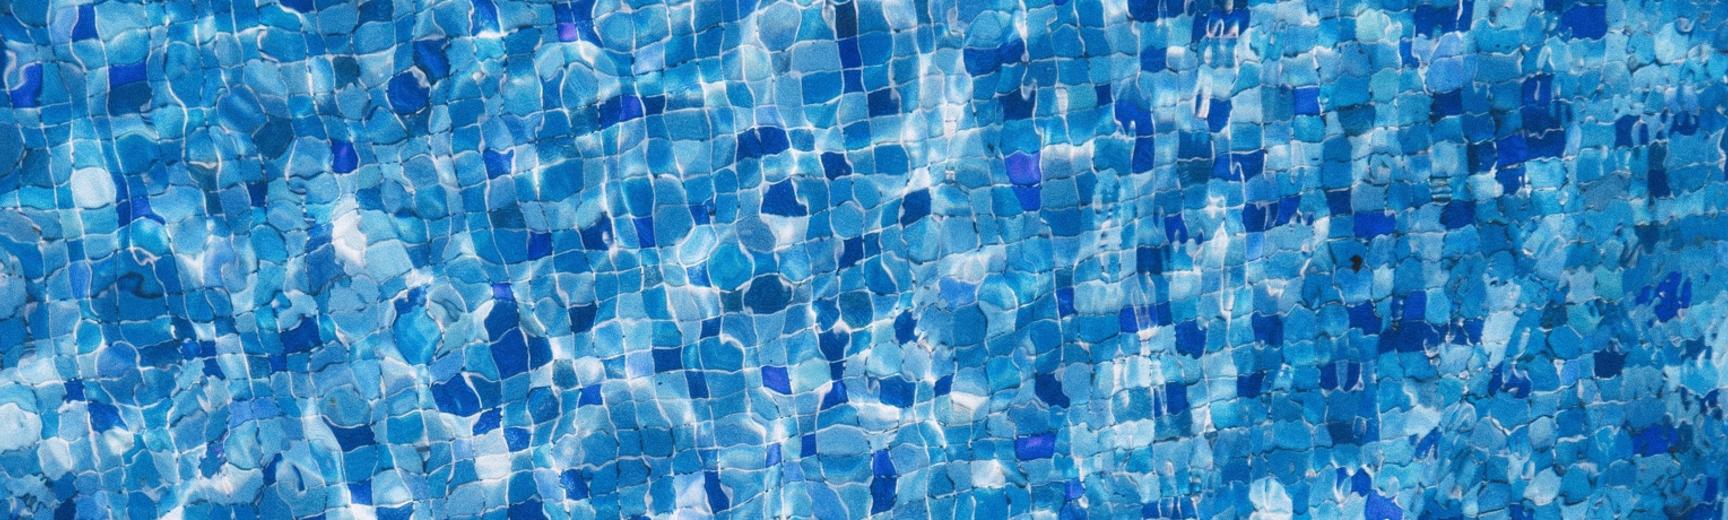 blue pool